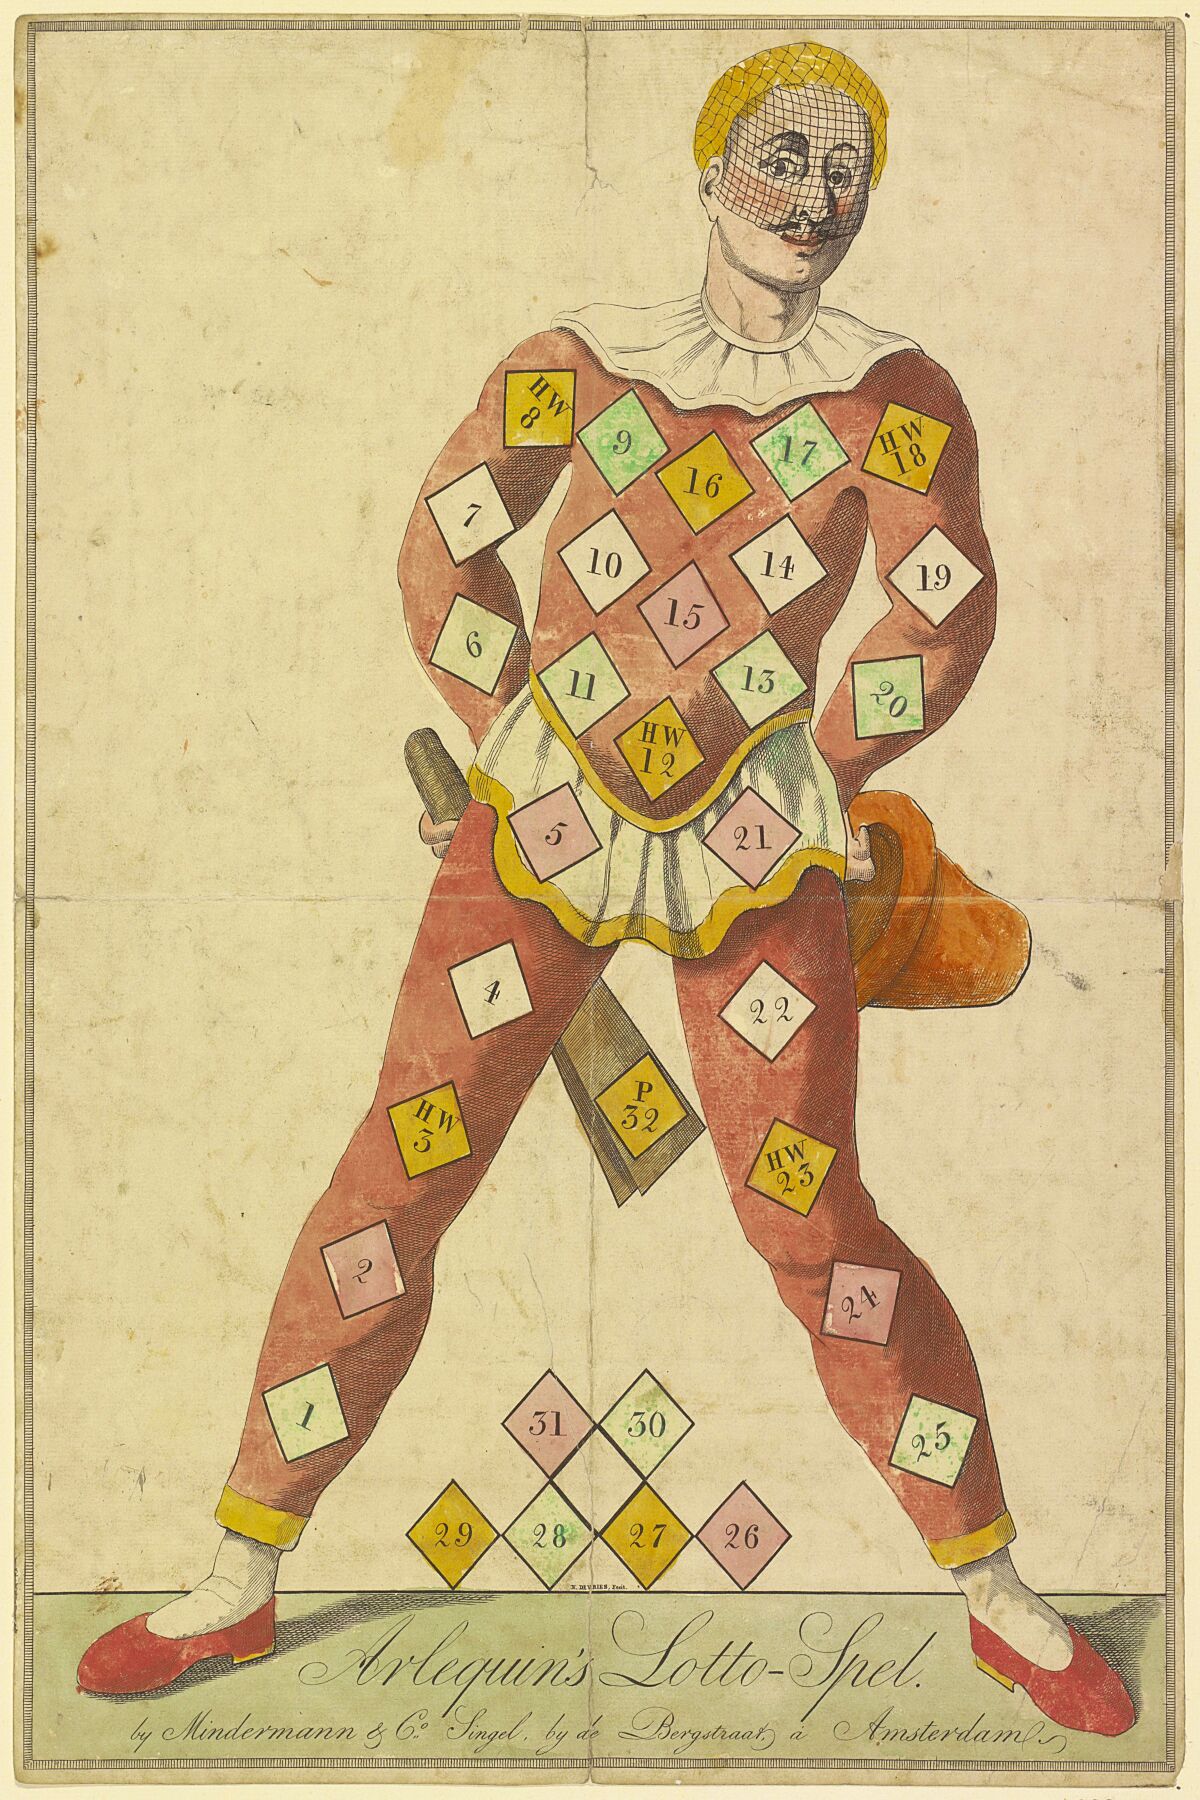 Arlequin's Lotto game, N. de Vries, 1814 - 1848